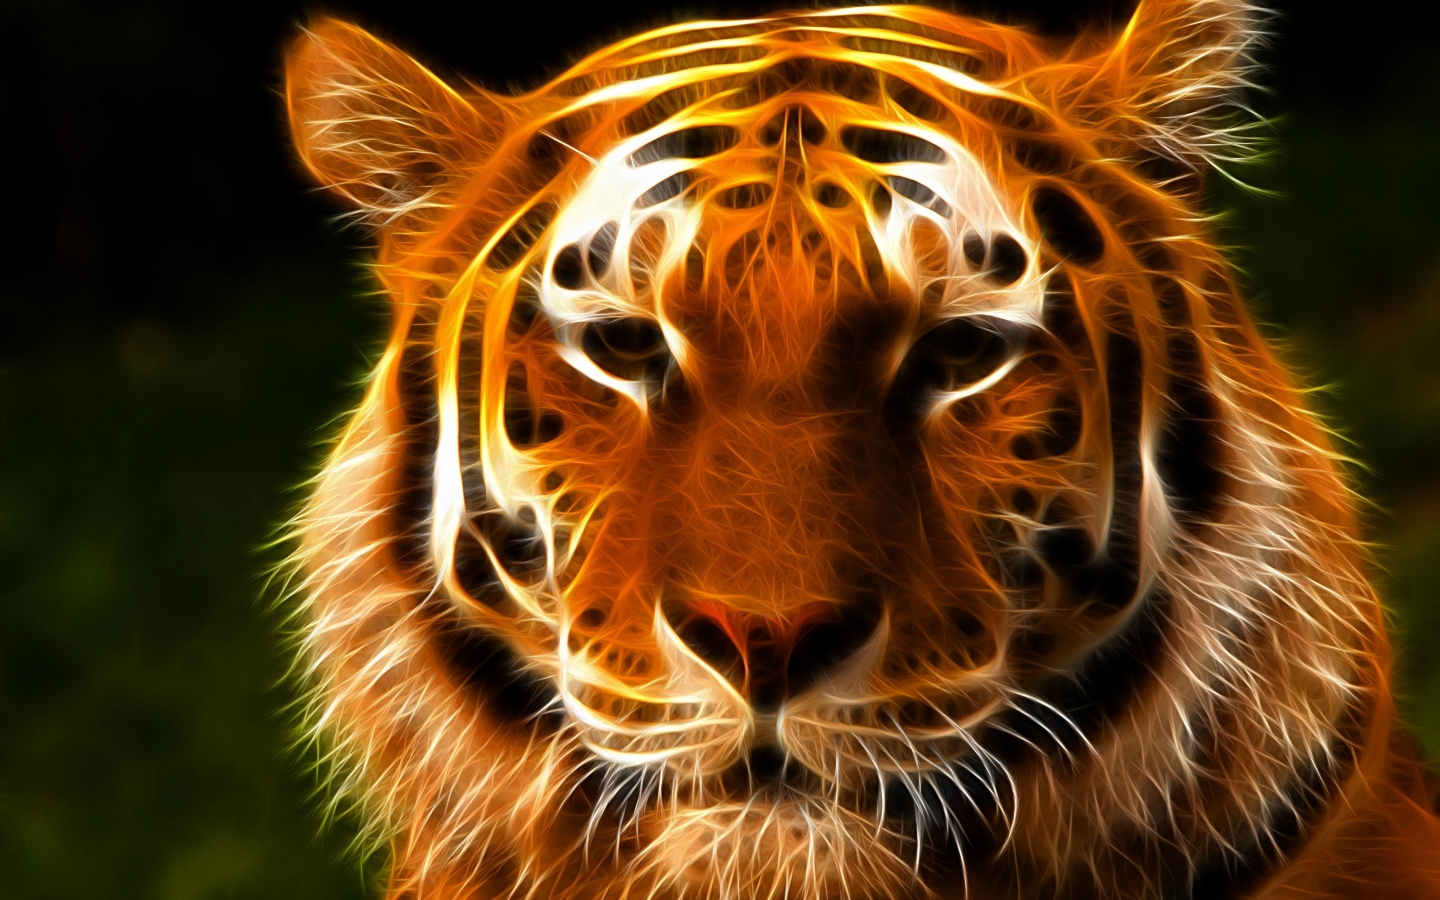 Tiger Face Art for 1440 x 900 widescreen resolution